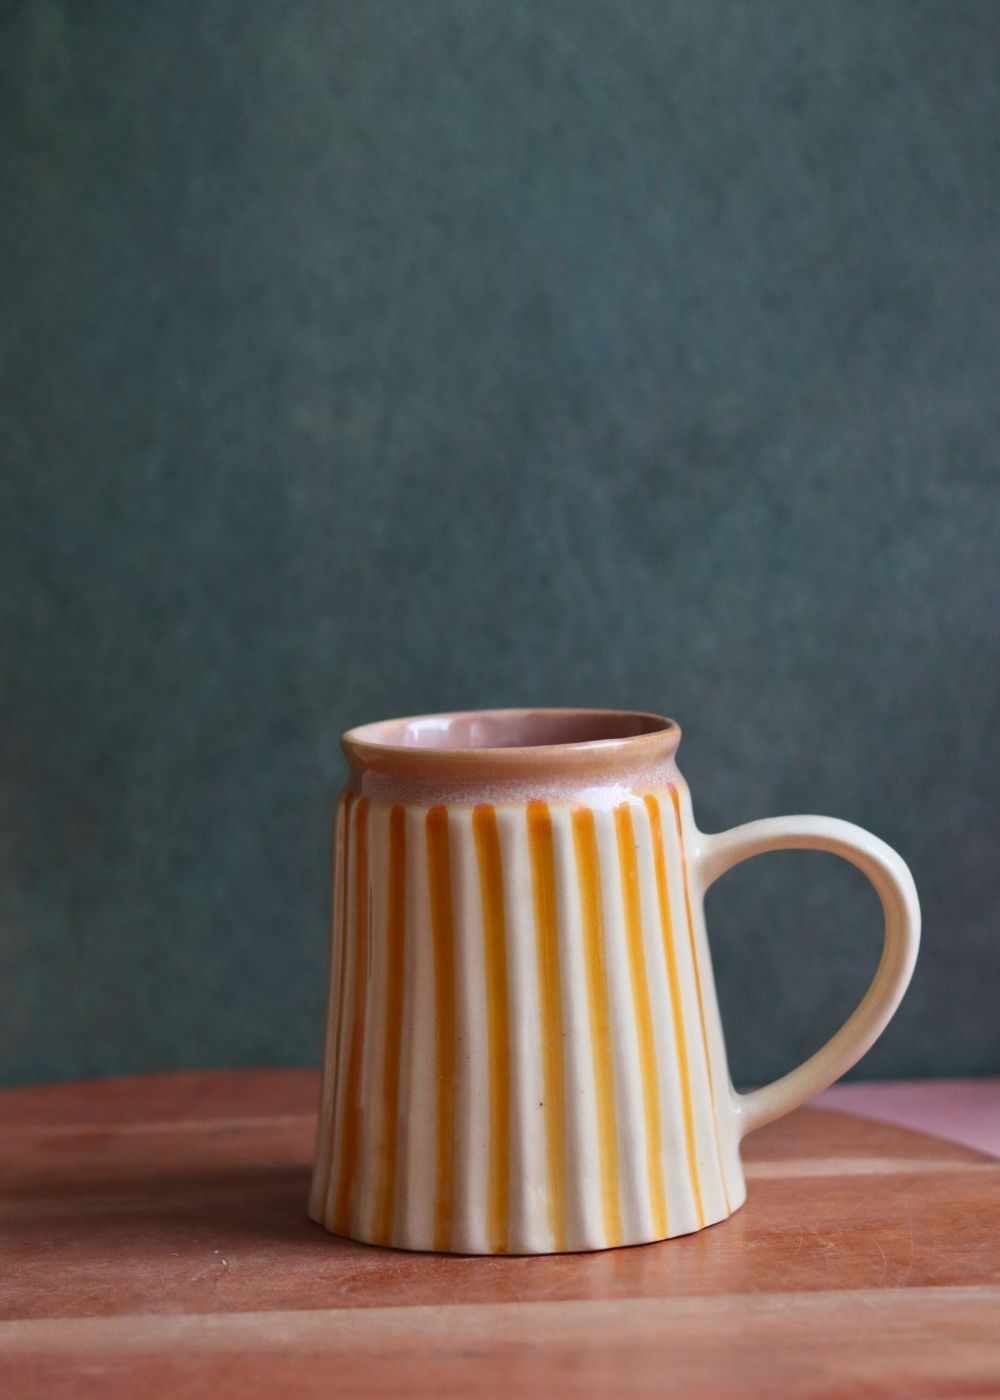 Handmade striped yellow mug